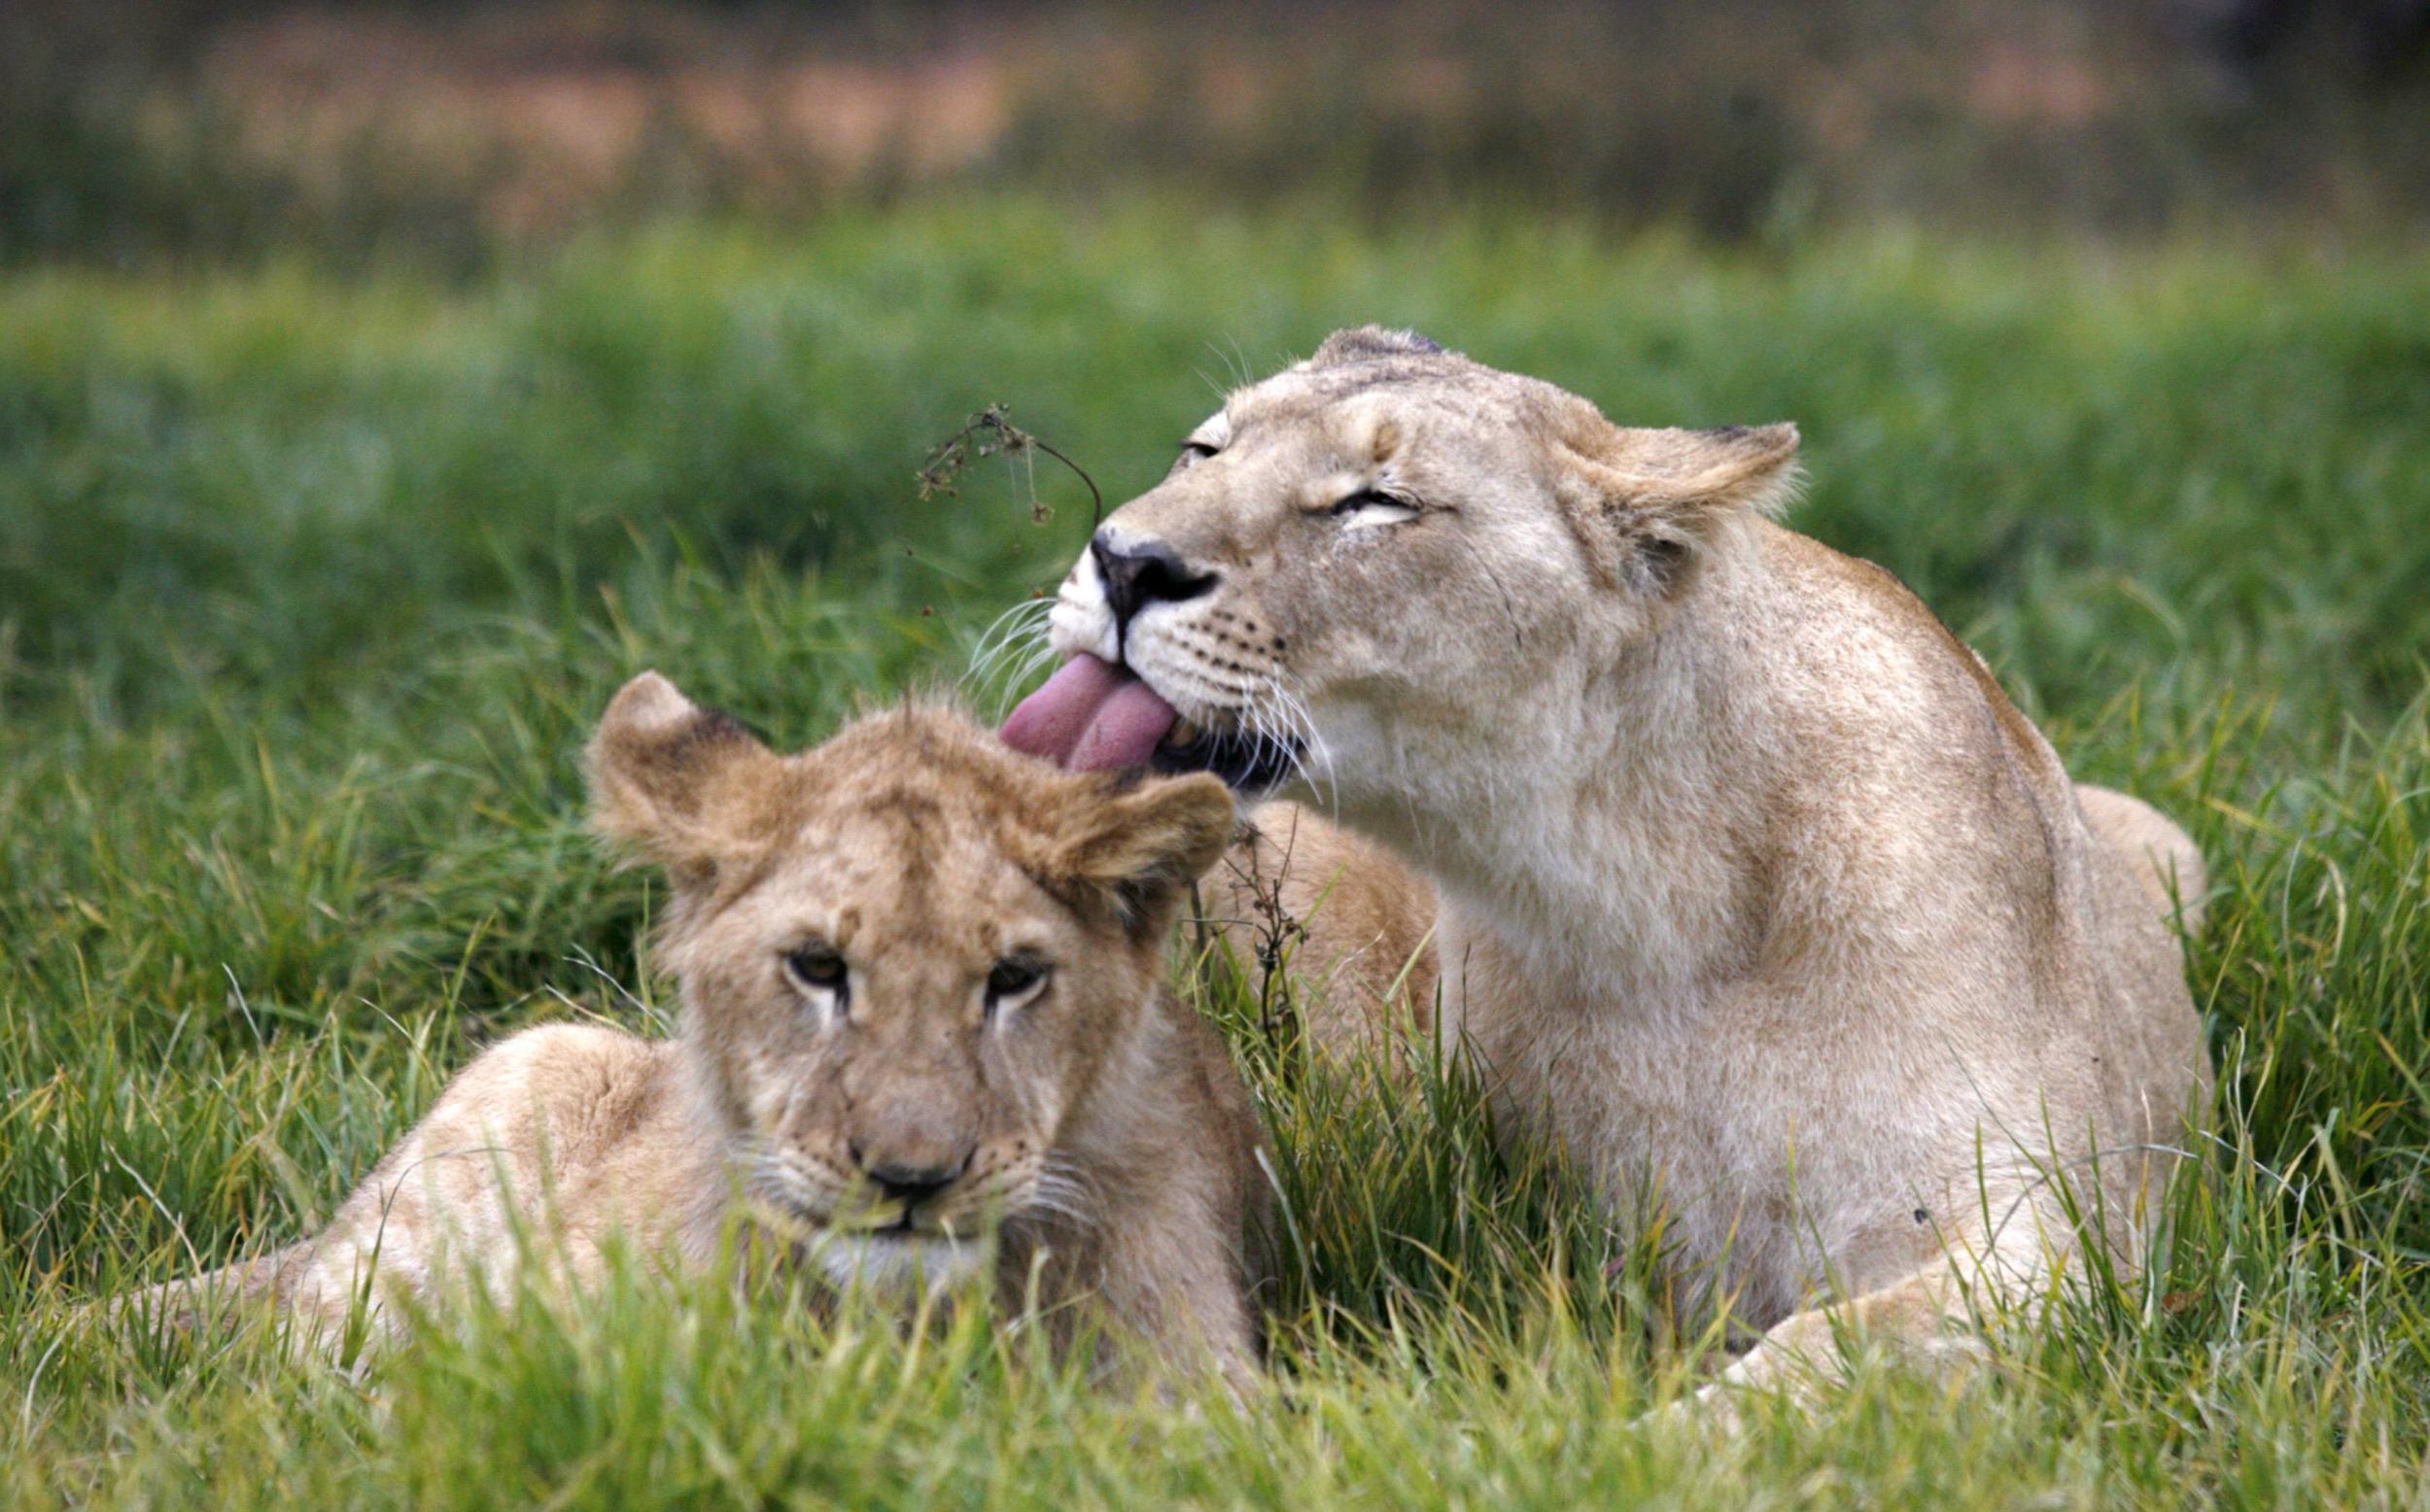 A lioness and cub in Uganda